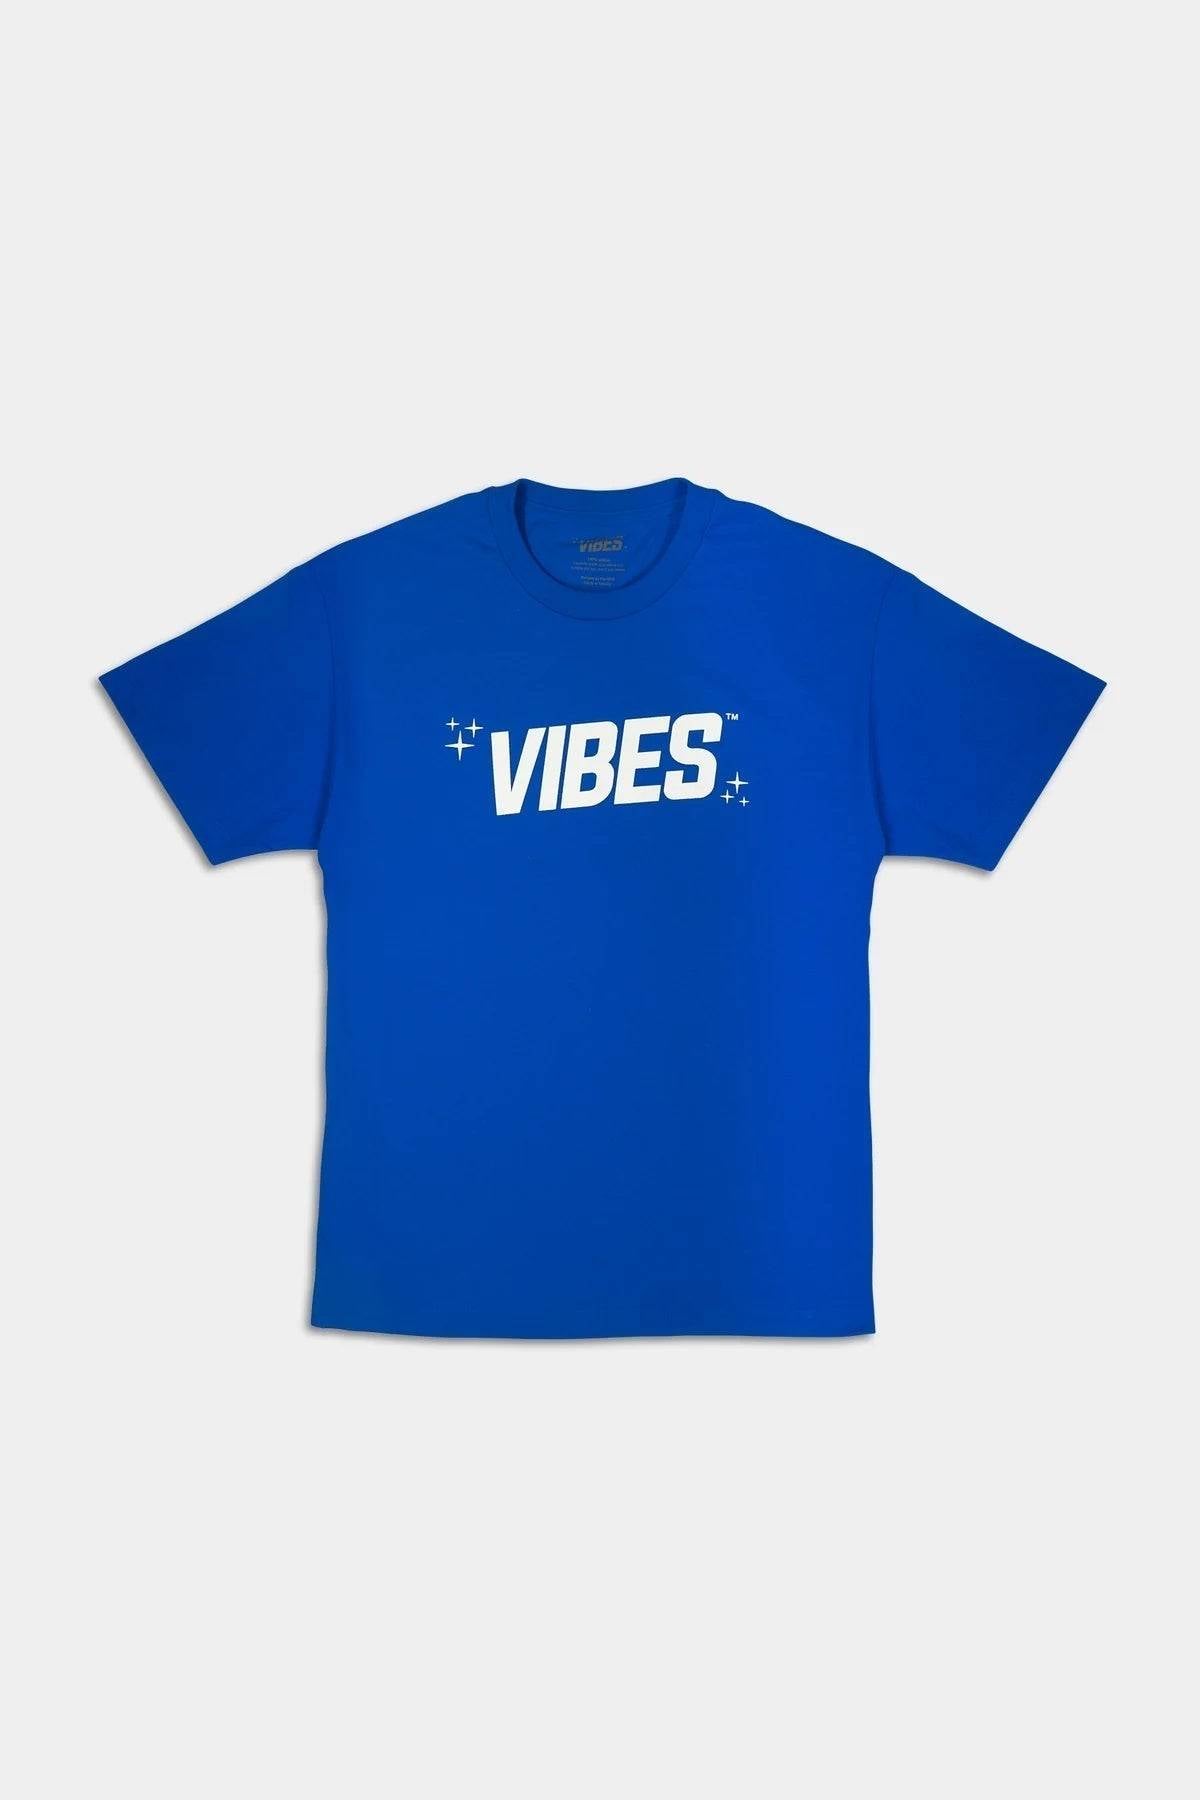 VIBES Blue With White Logo T-Shirt Medium